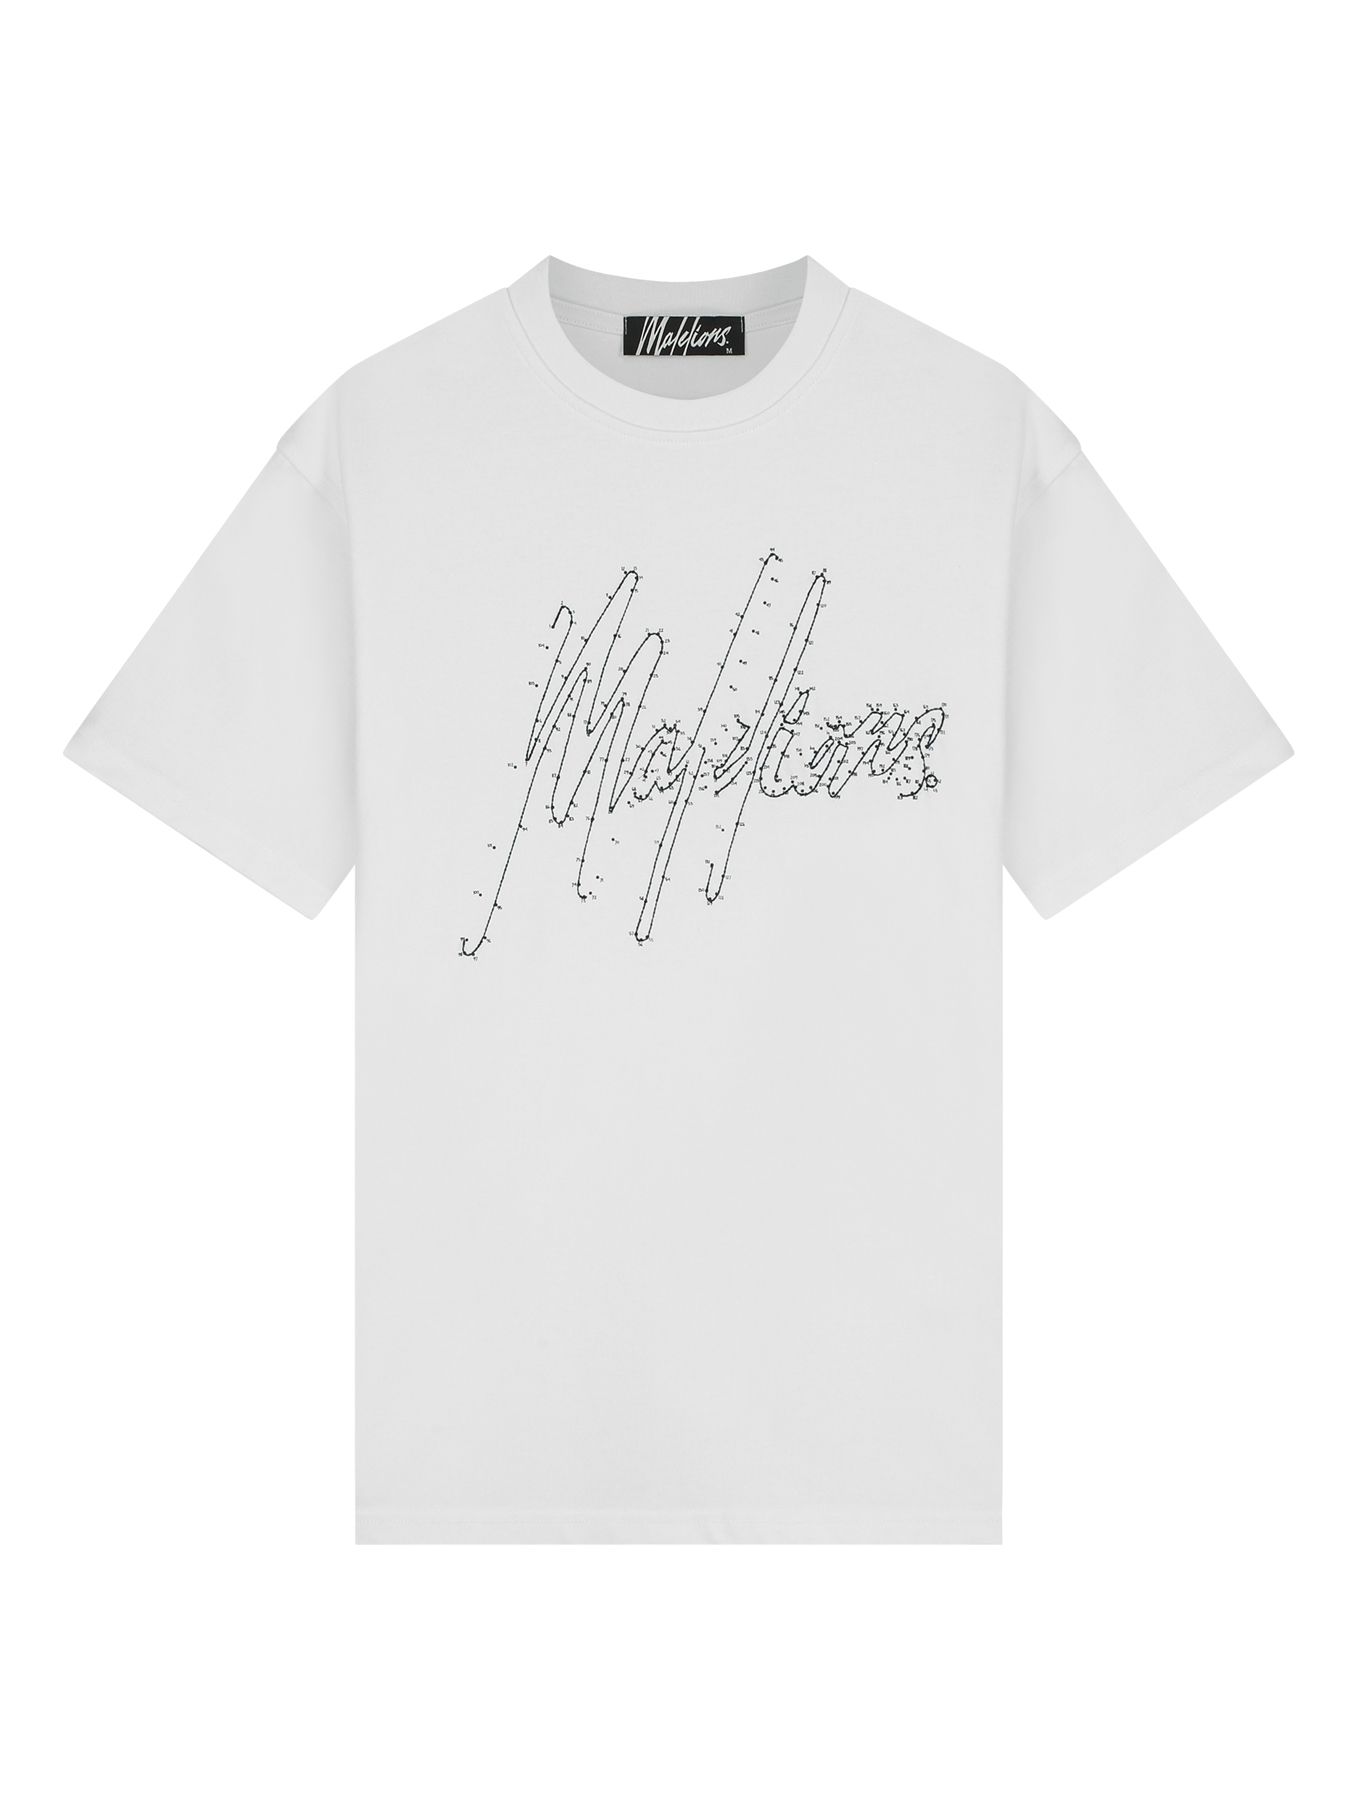 Malelions M2-ss23-27 T-shirt White/navy 00103097-111